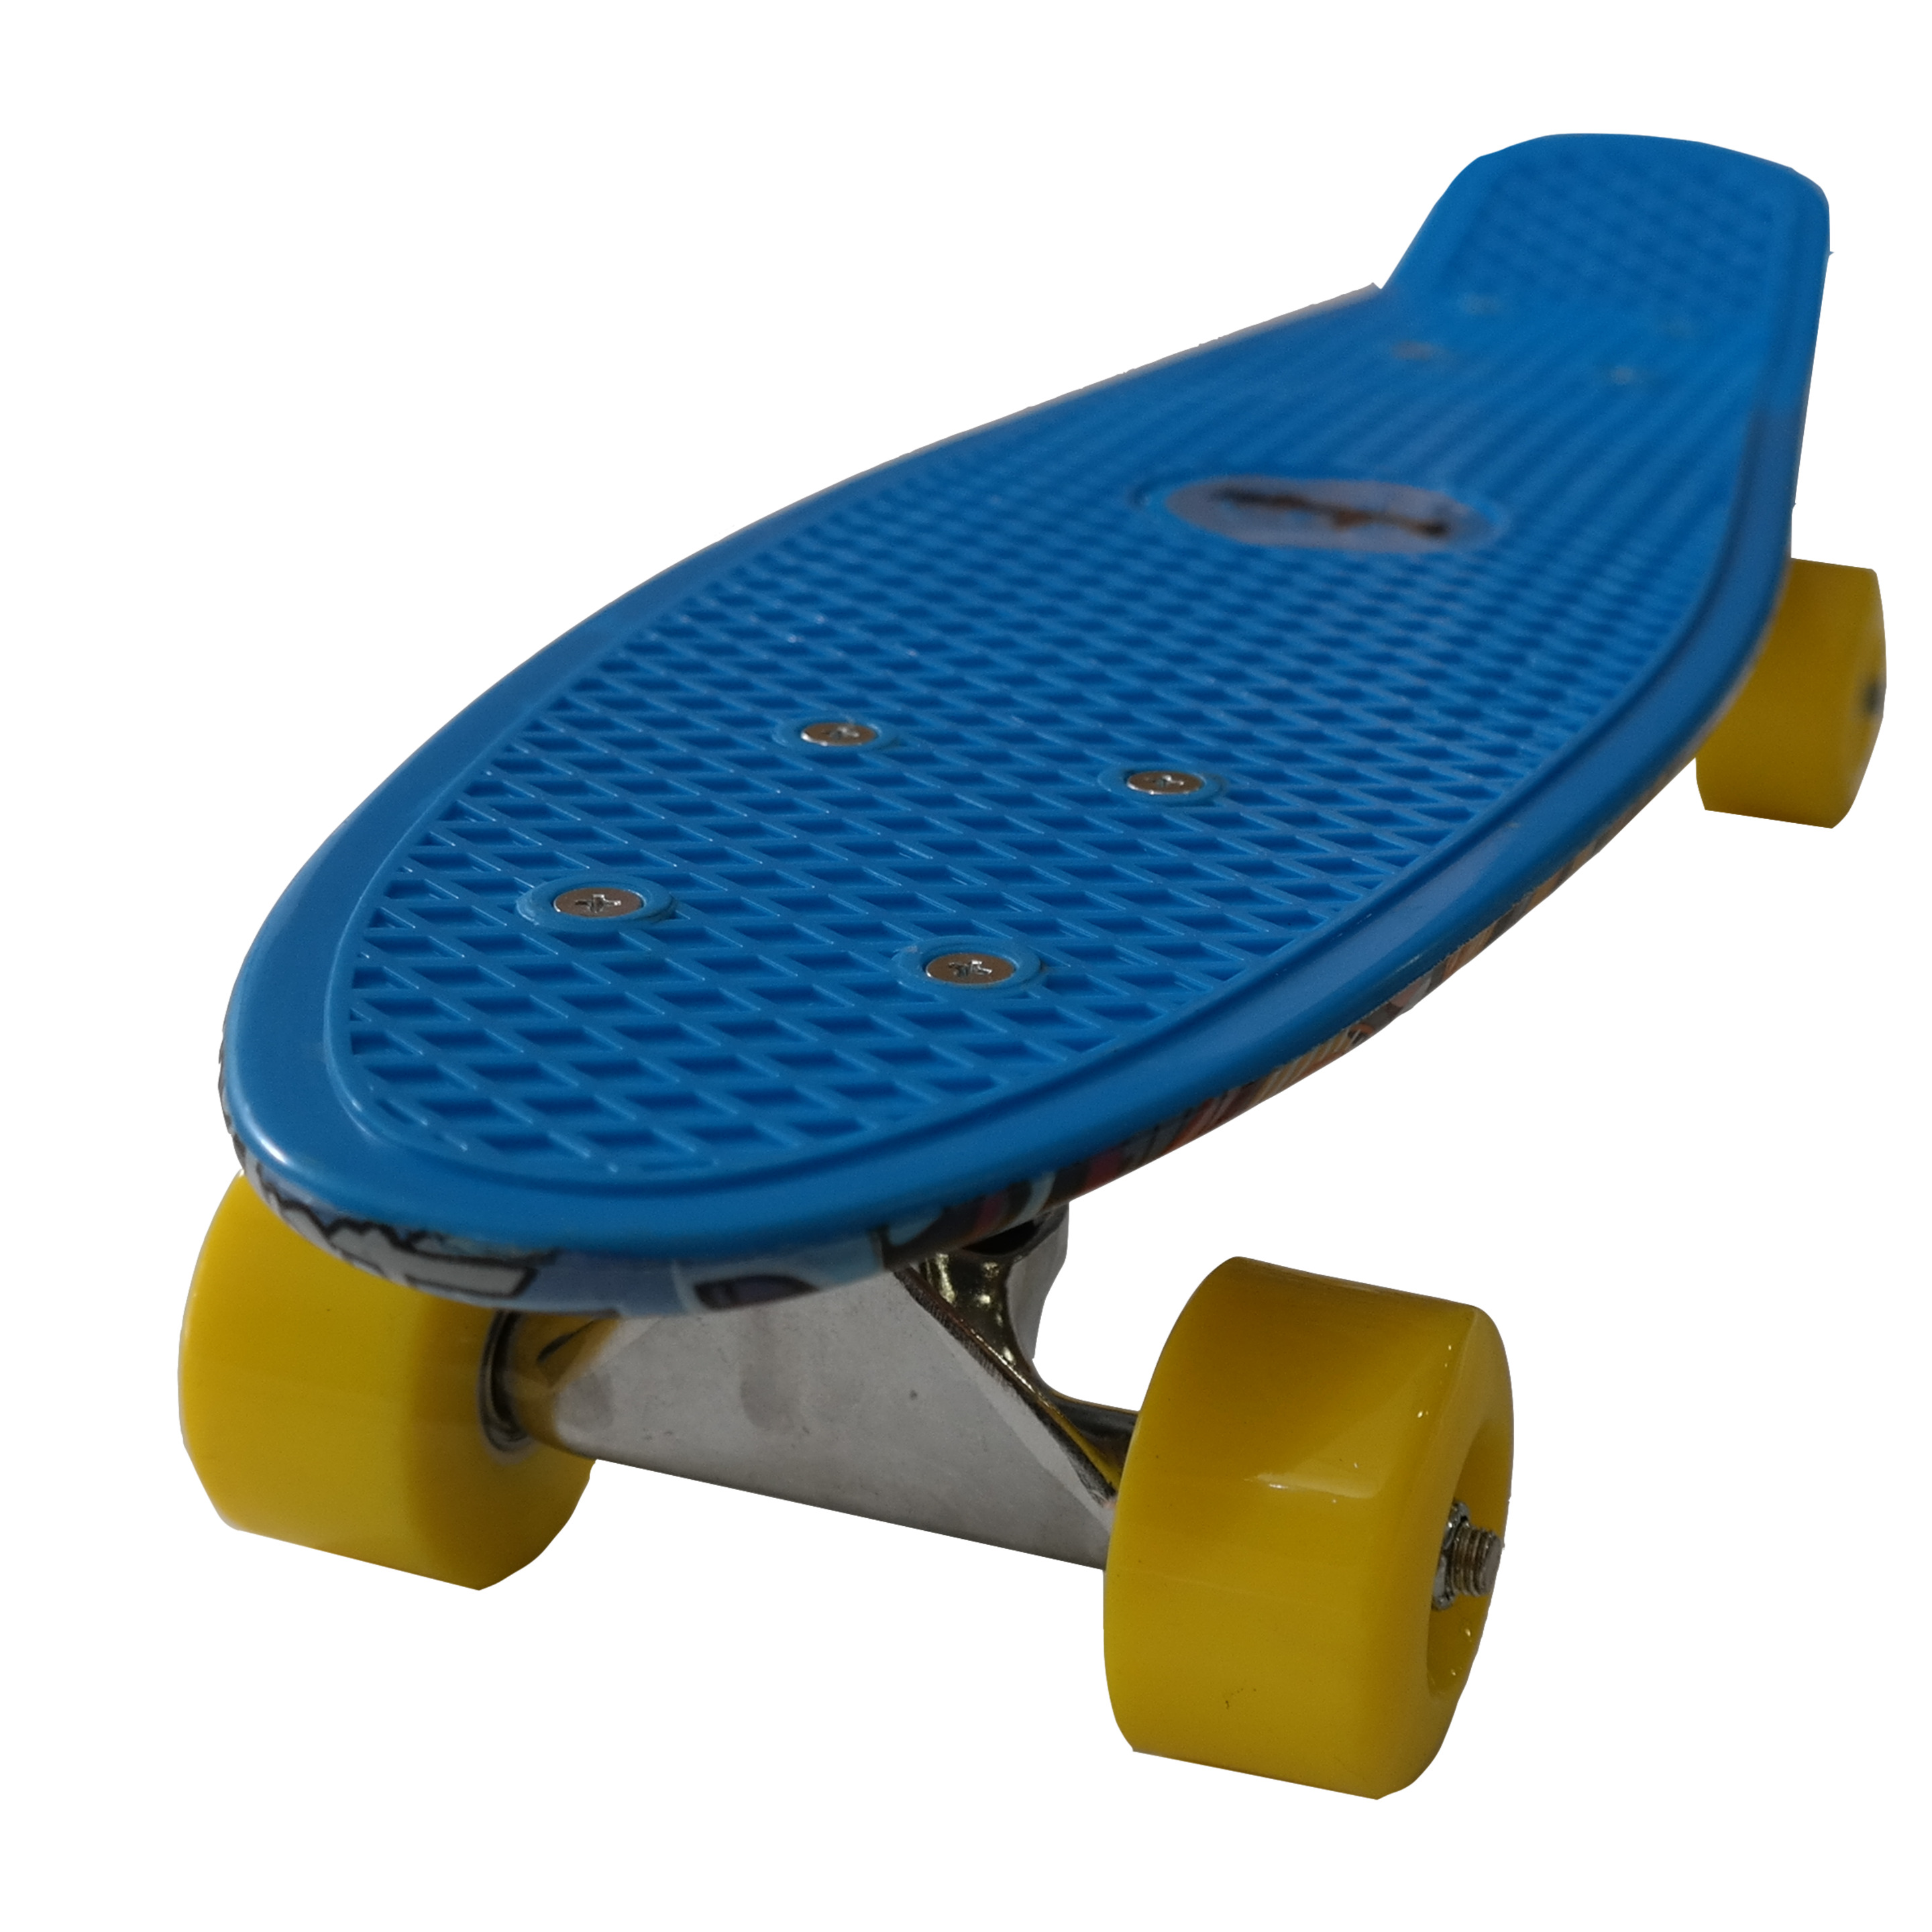 Tabla Skate Bollinger Penny Board Con Graficos Azul